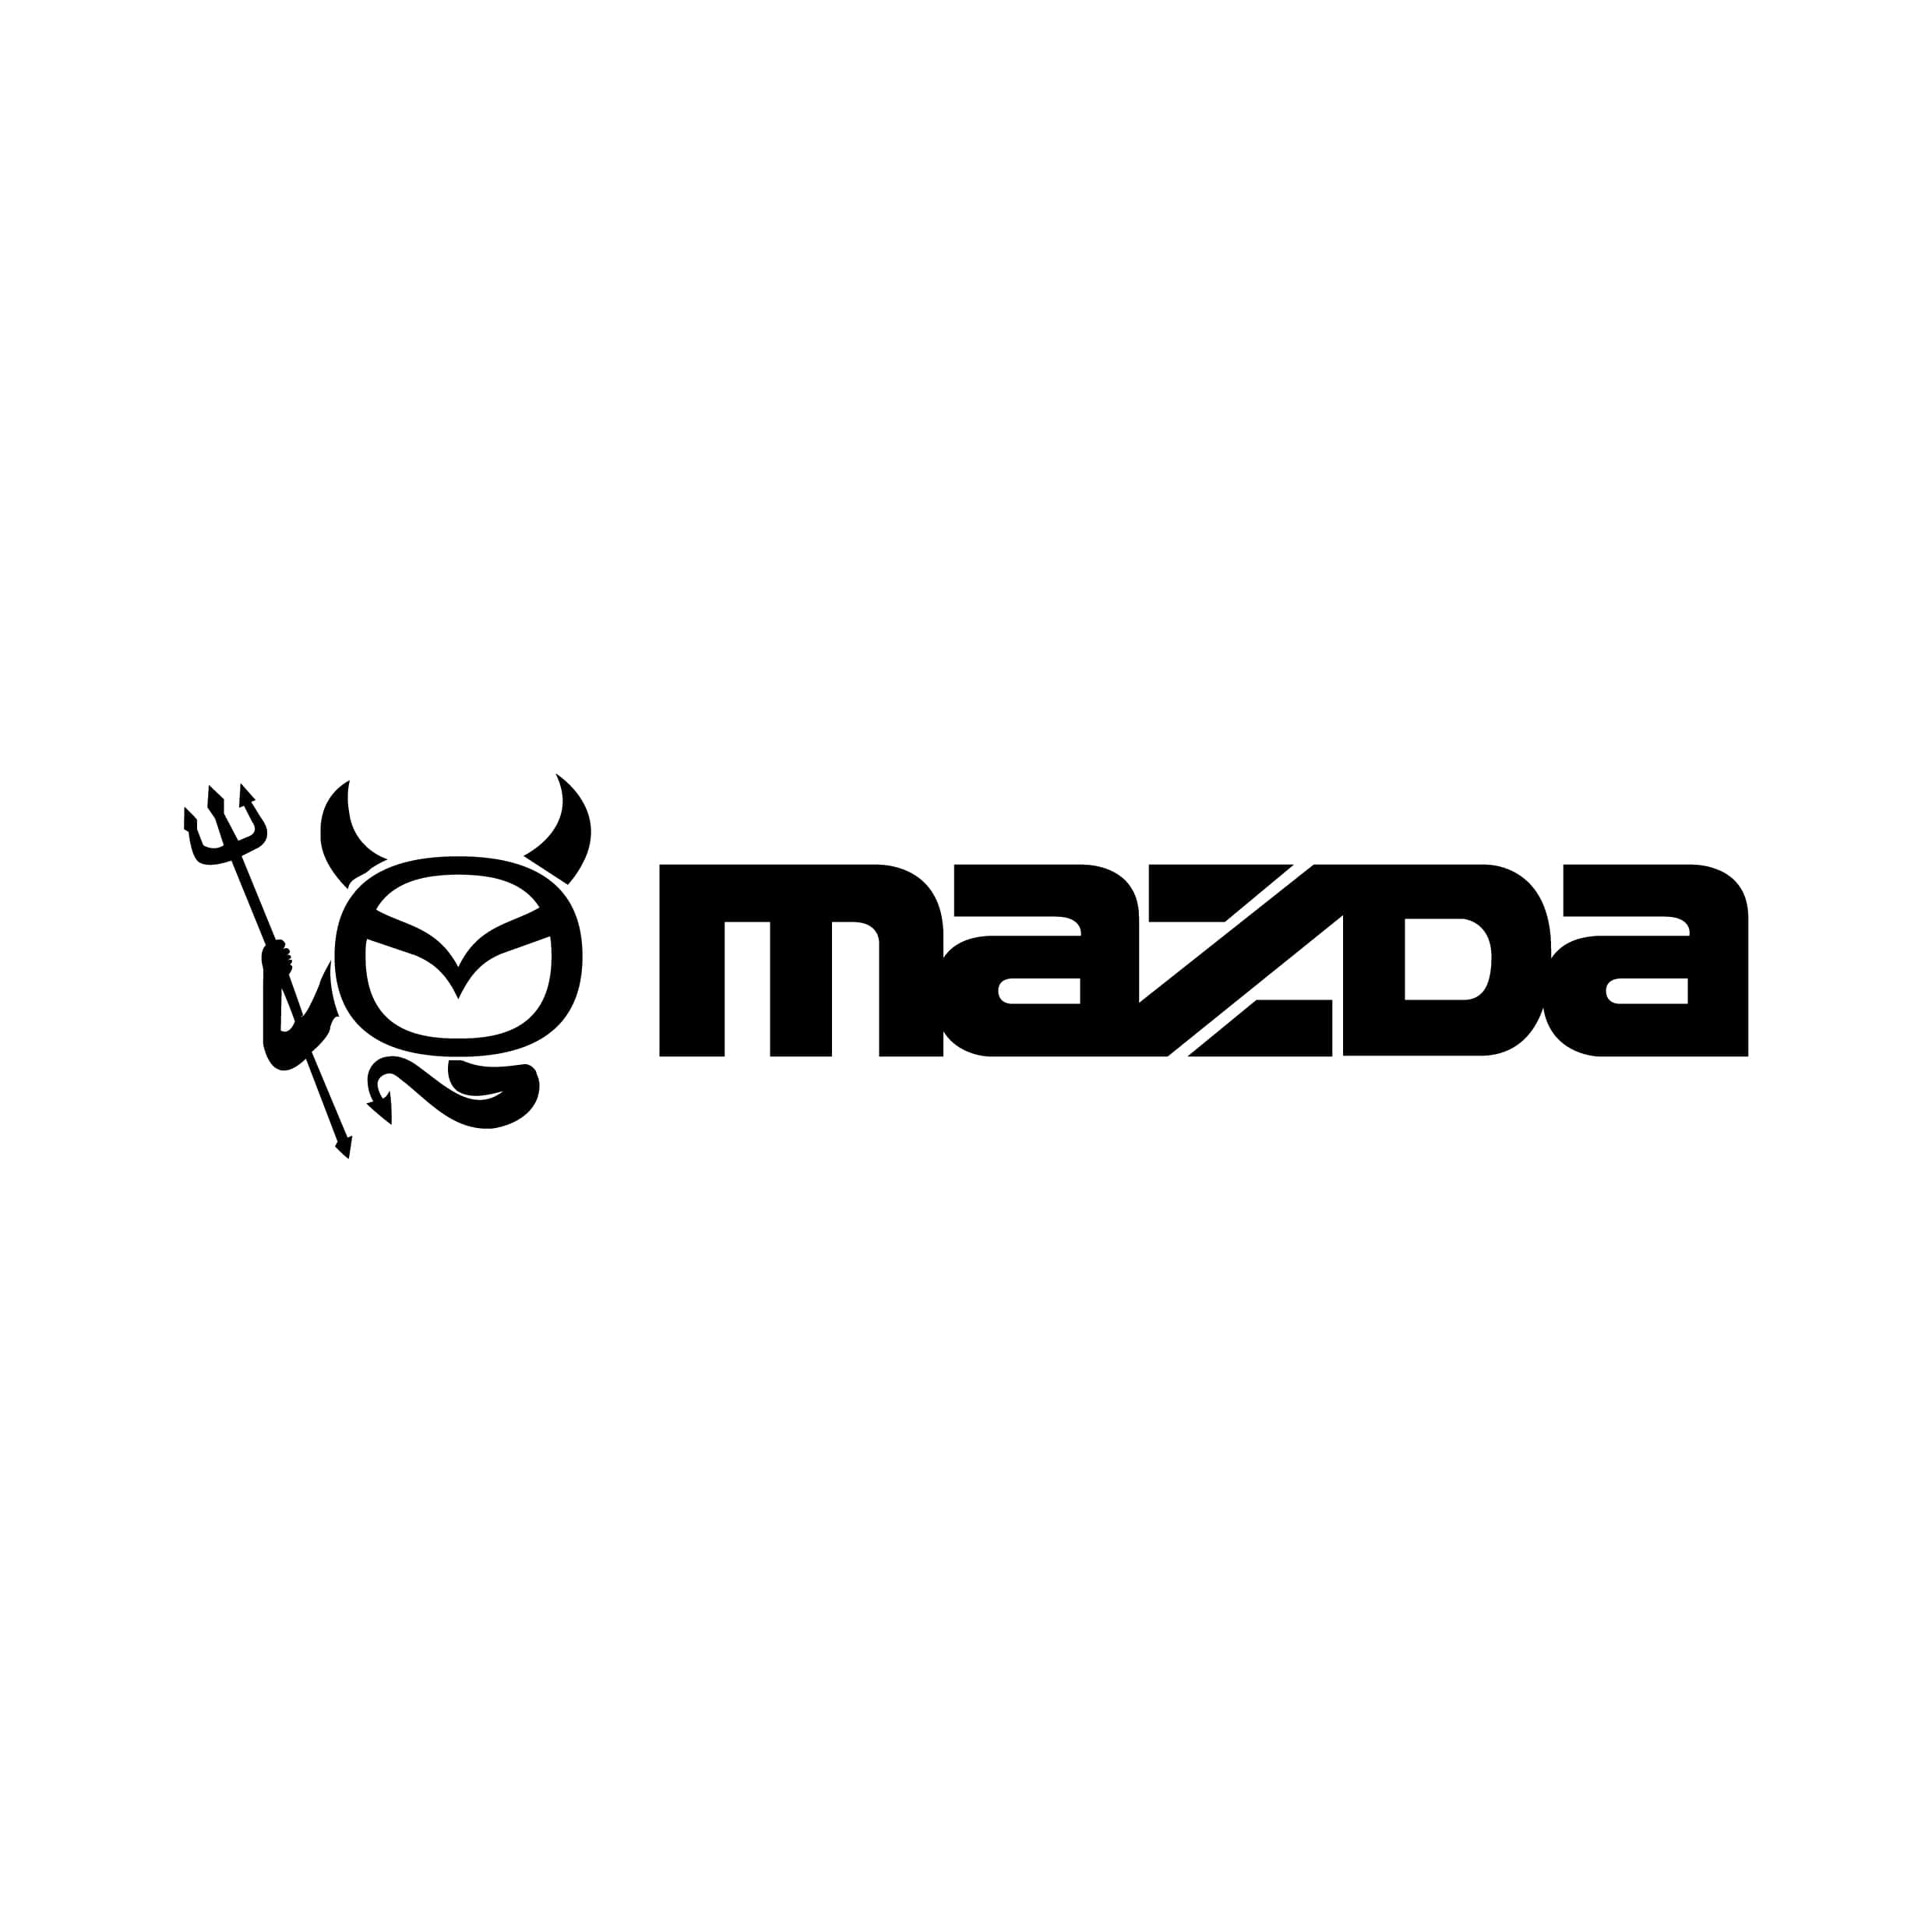 stickers-mazda-ref5-autocollant-voiture-sticker-auto-autocollants-decals-sponsors-racing-tuning-sport-logo-min